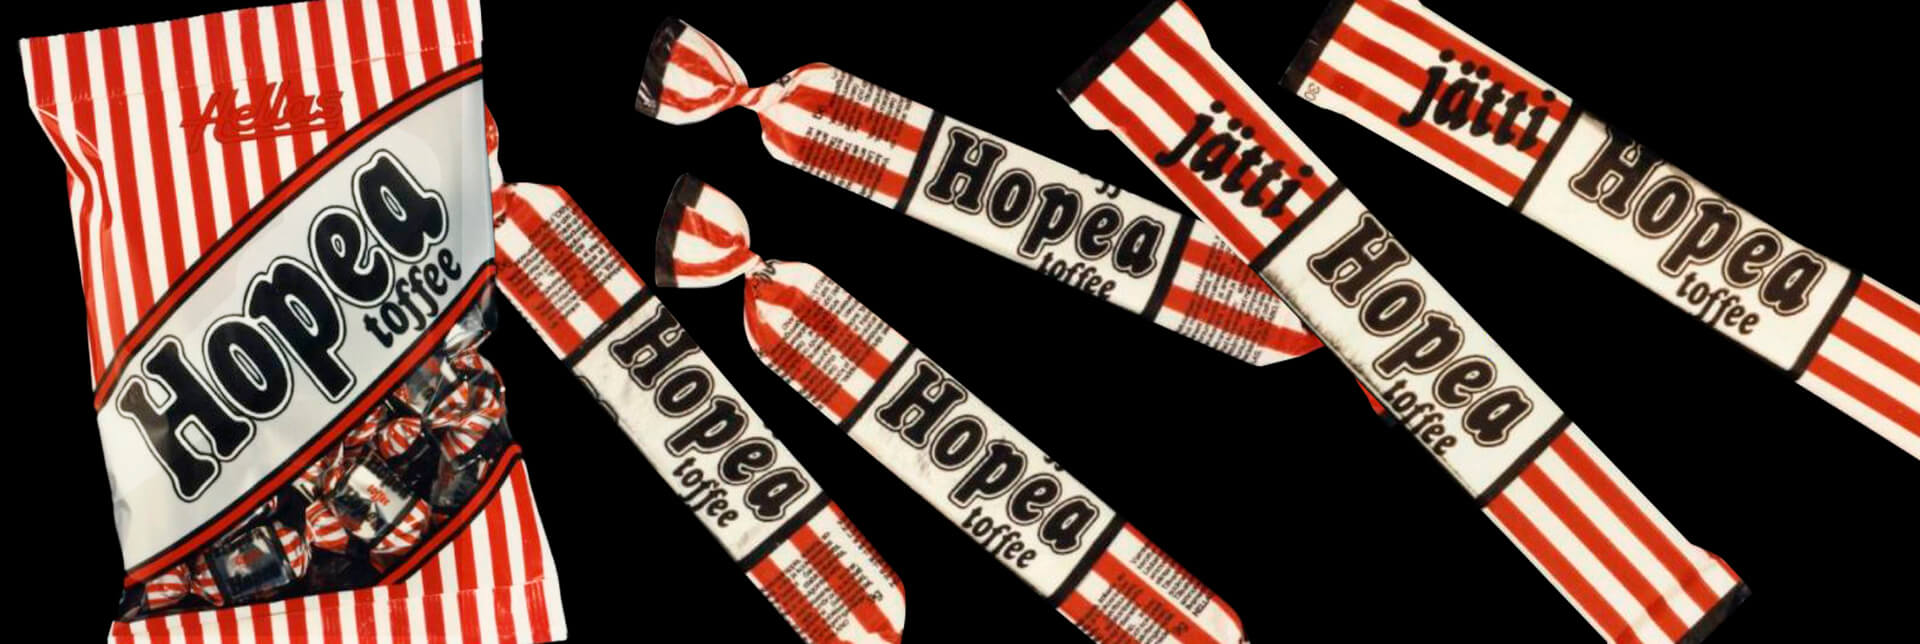 Brandit Hopea Toffee Historia Hero banner